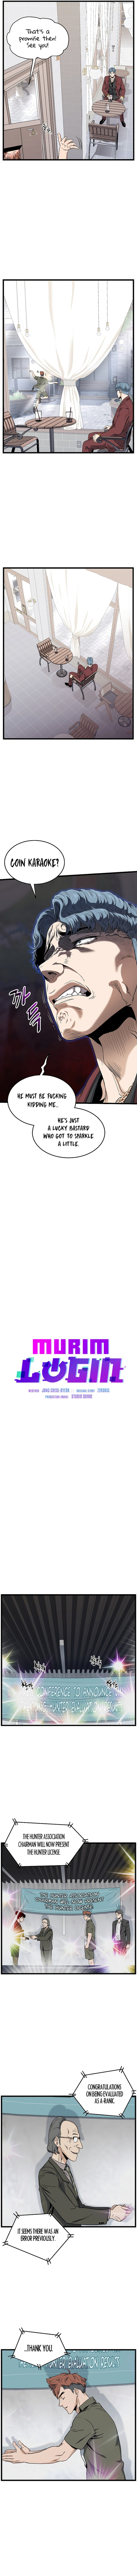 murim_login_139_4